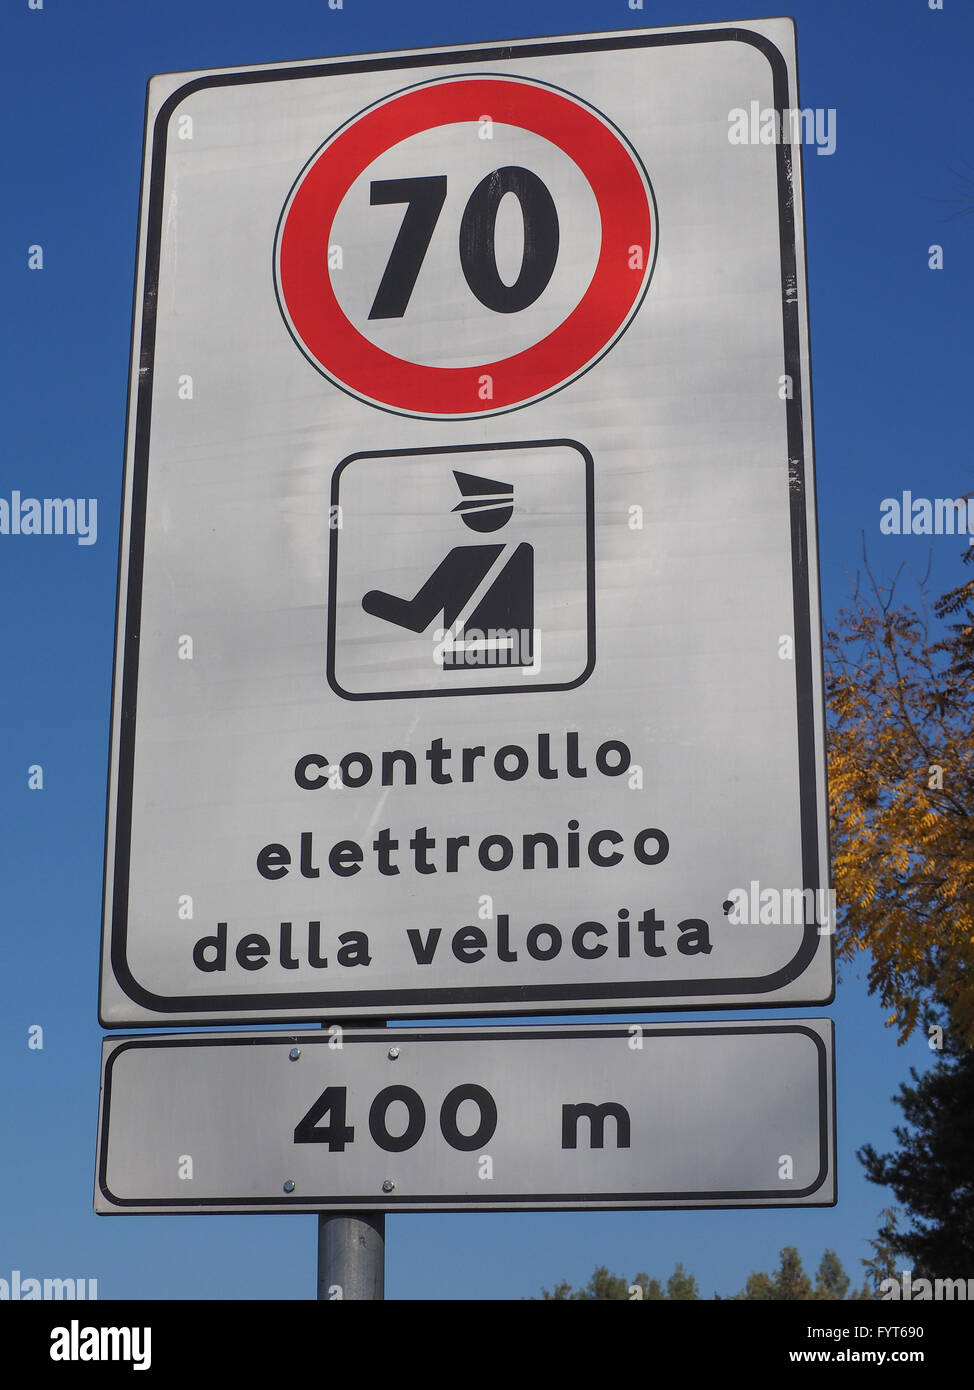 File:Cartello stradale ironico 1.jpg - Wikimedia Commons